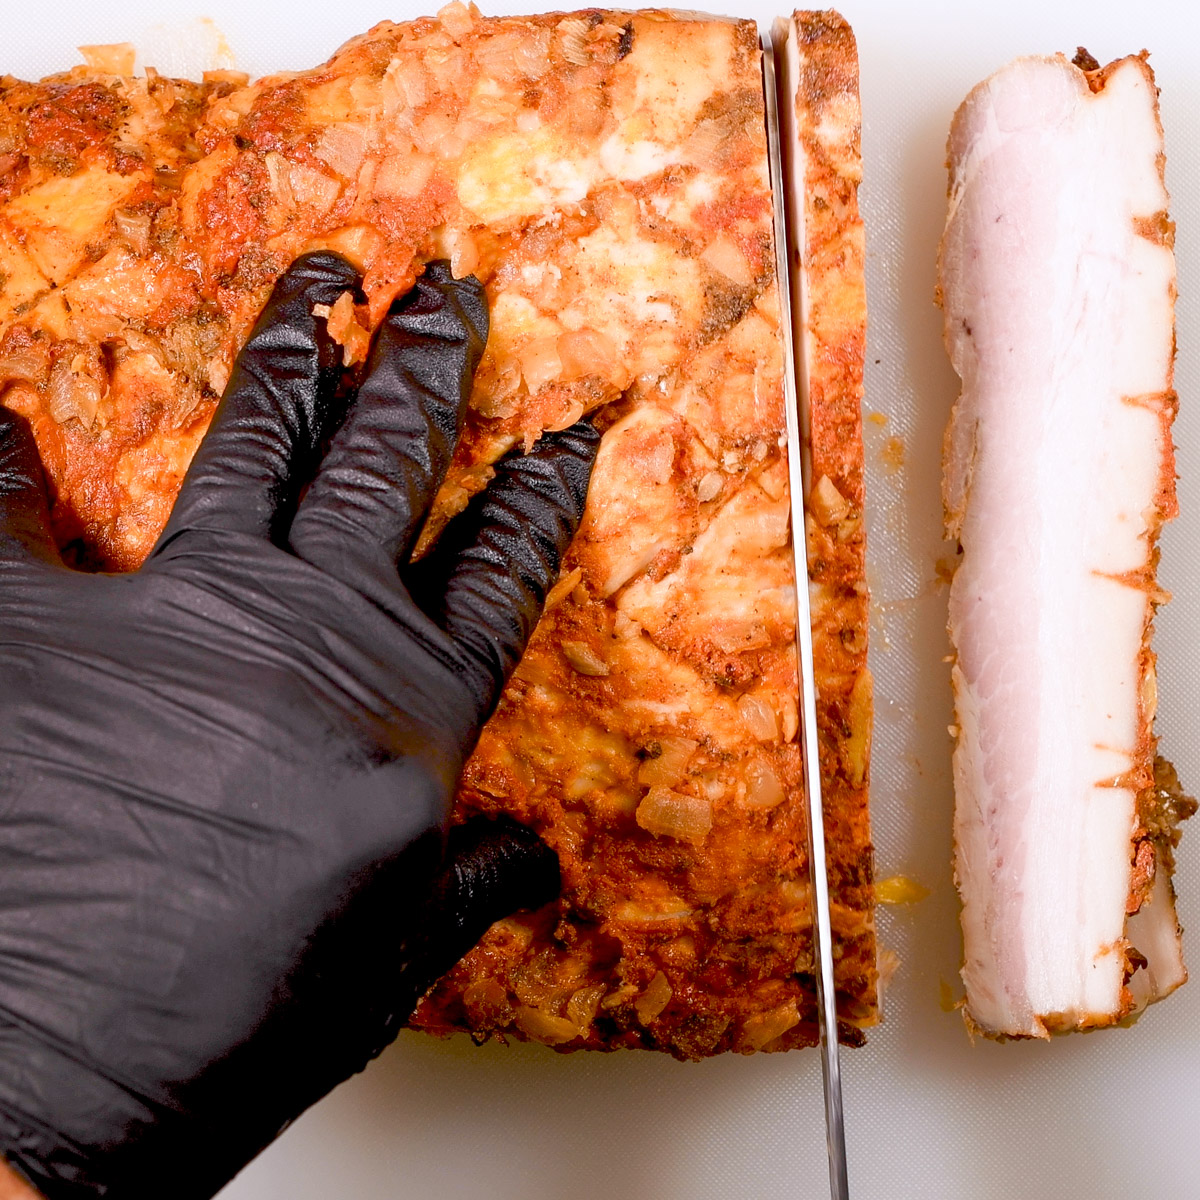 Slice the pork belly into ¼" strips.